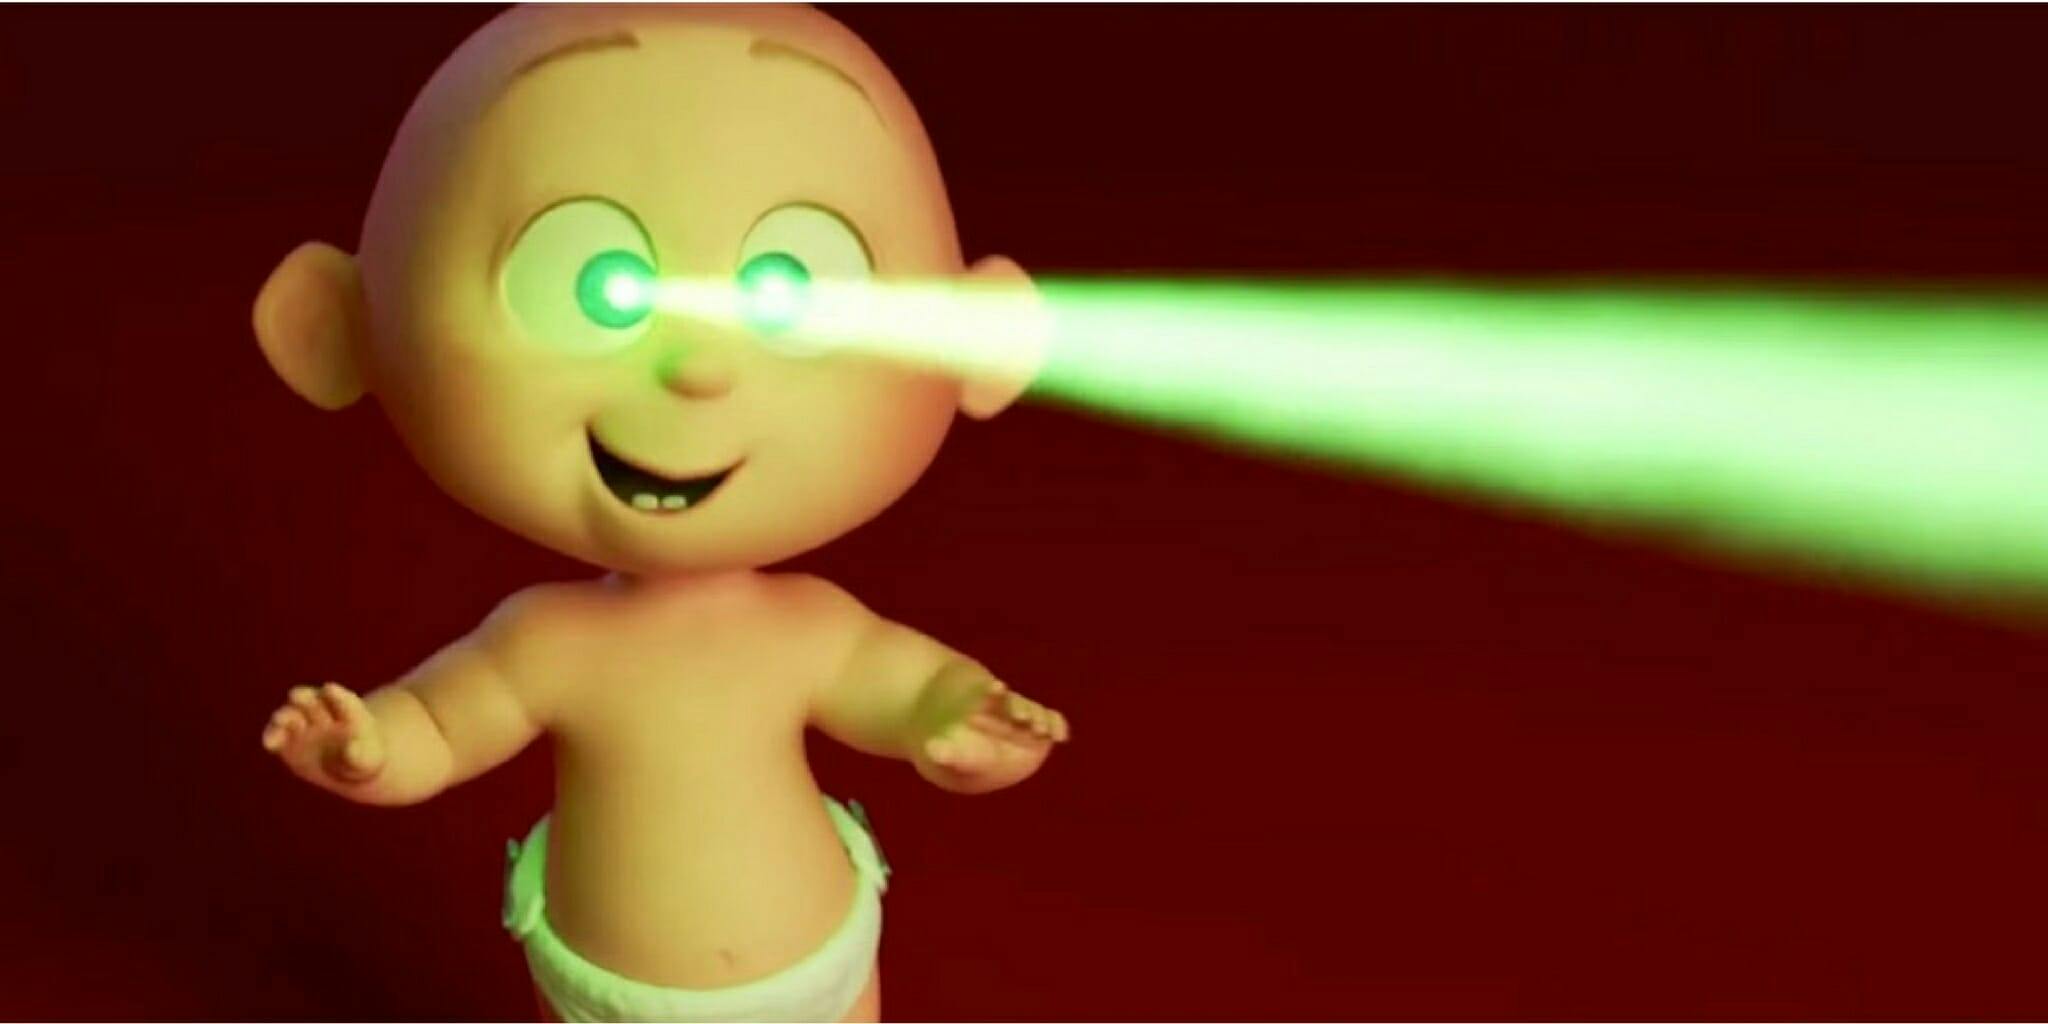 Video The Incredibles 2 Trailer Shows Jack Jack Shooting Eye Laser Beams